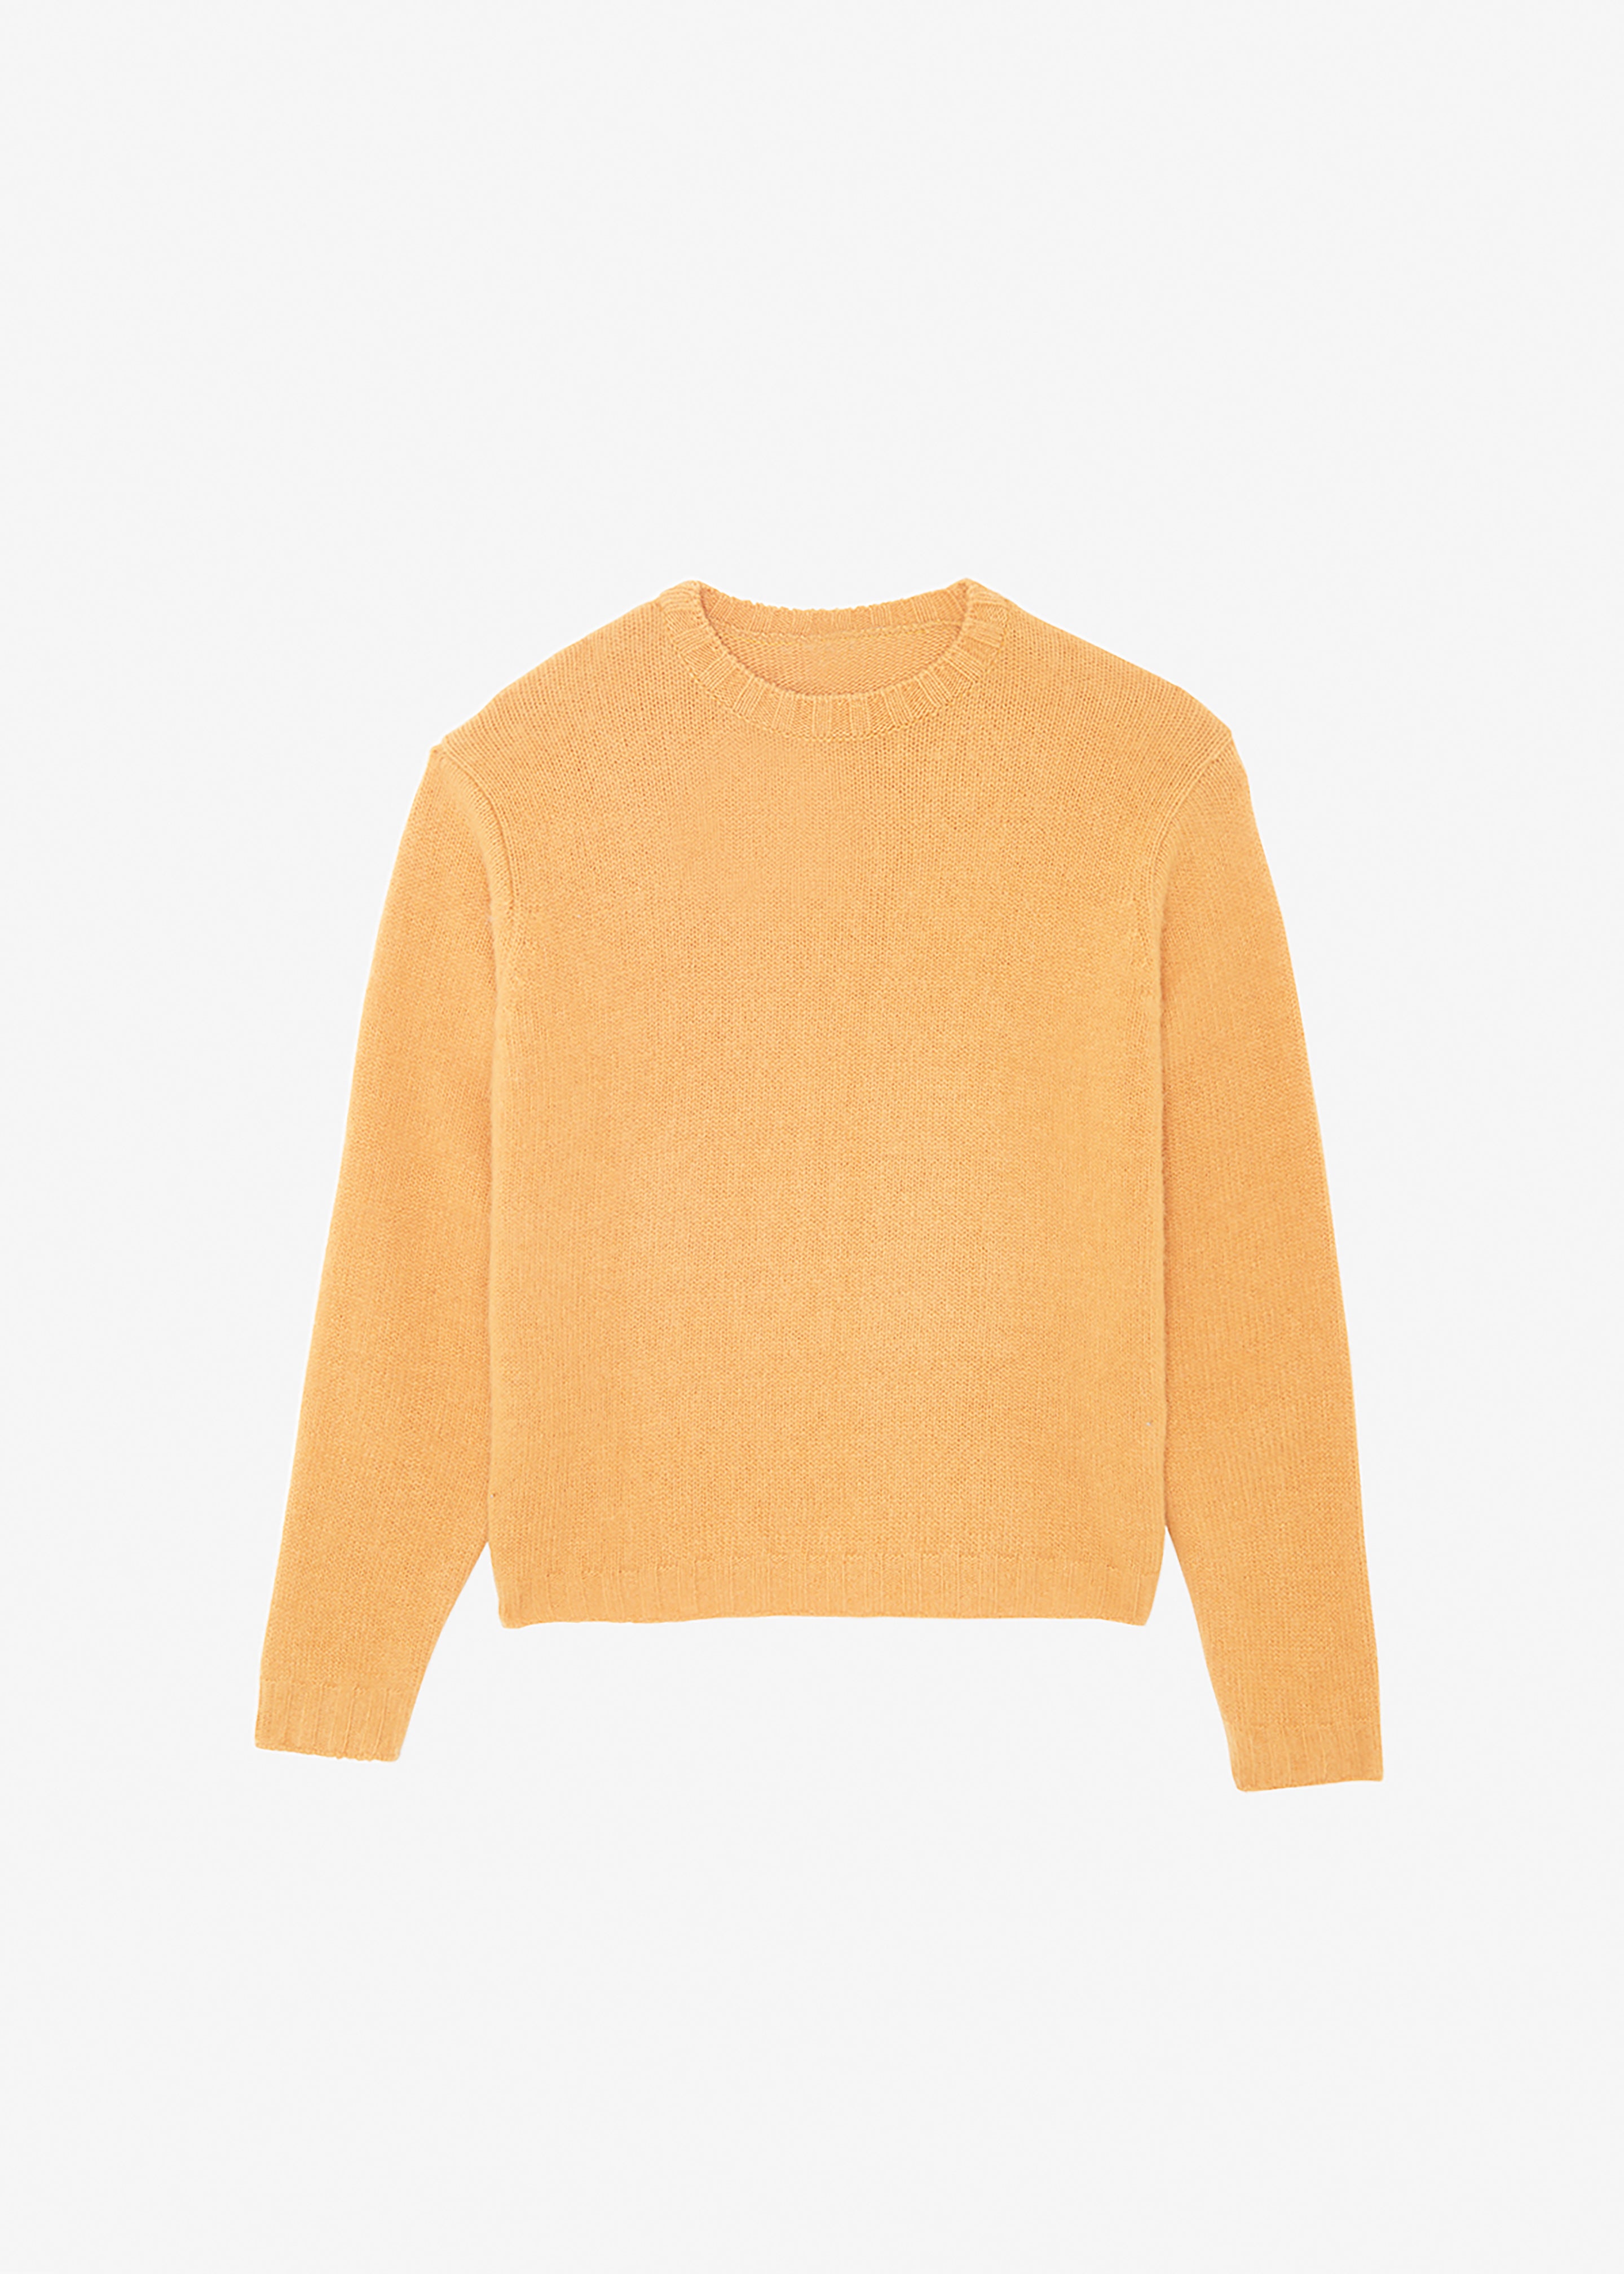 Lorain Sweater - Orange - 7